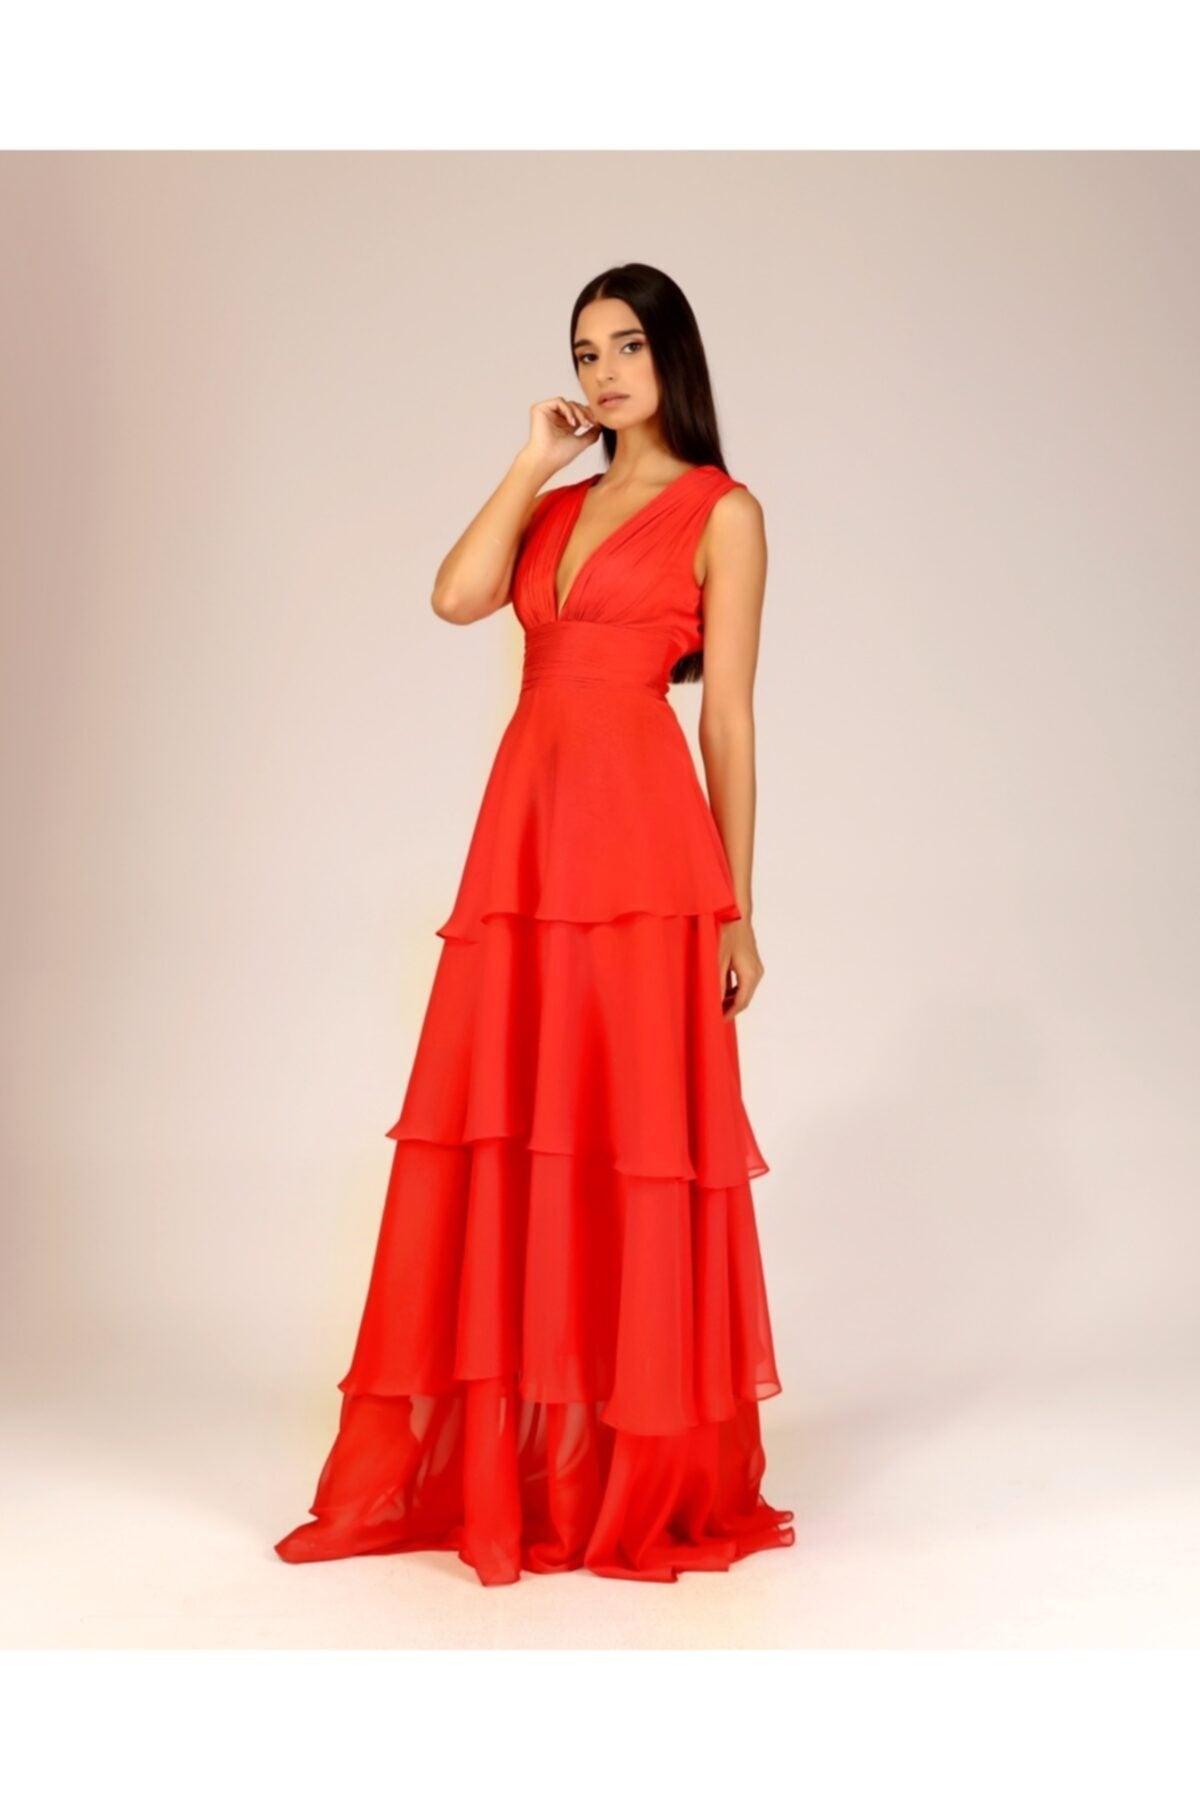 Beatrice Red Draped Detailed Ruffle Dress - Swordslife